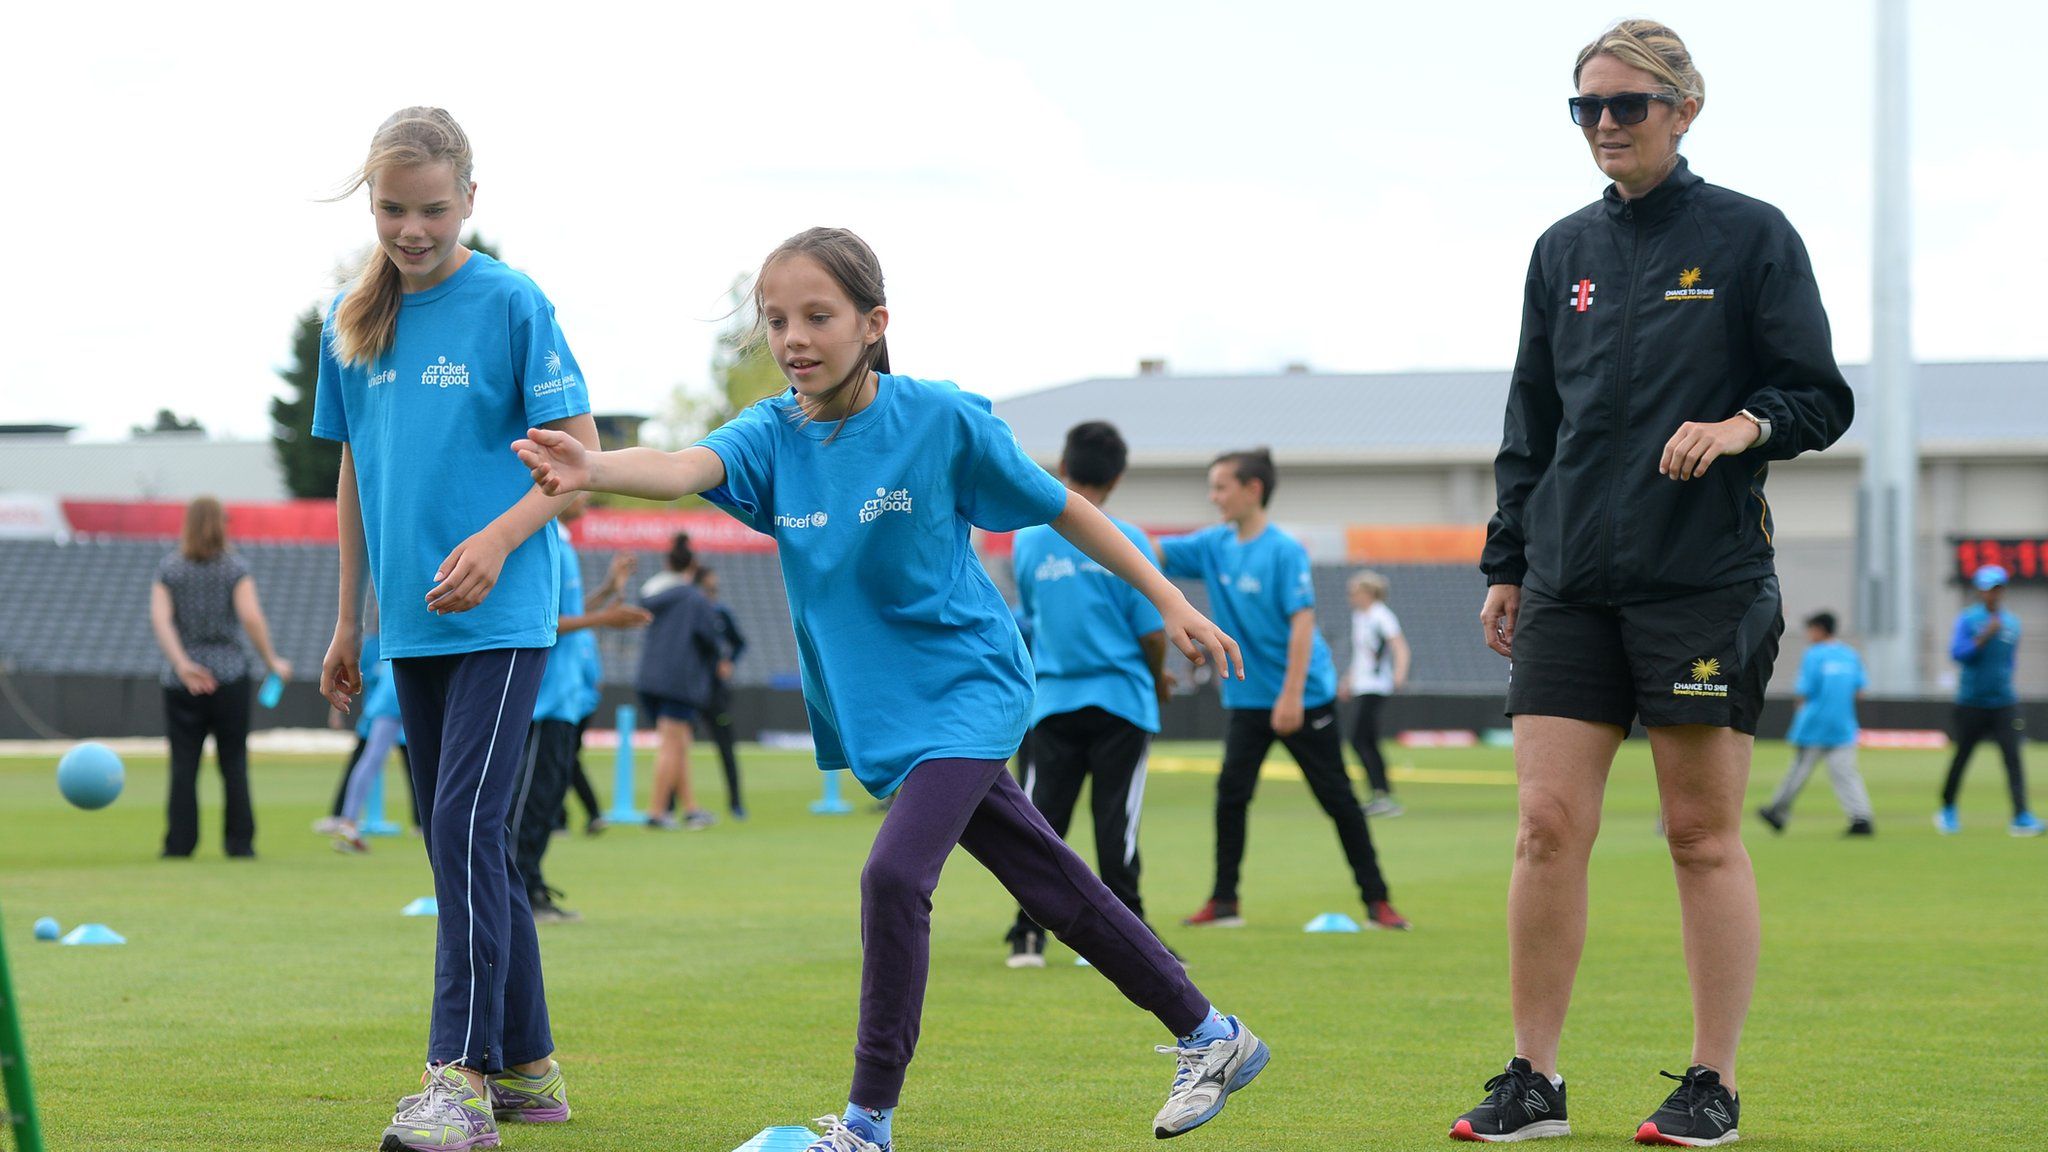 Former England captain Charlotte Edwards coaching some girls